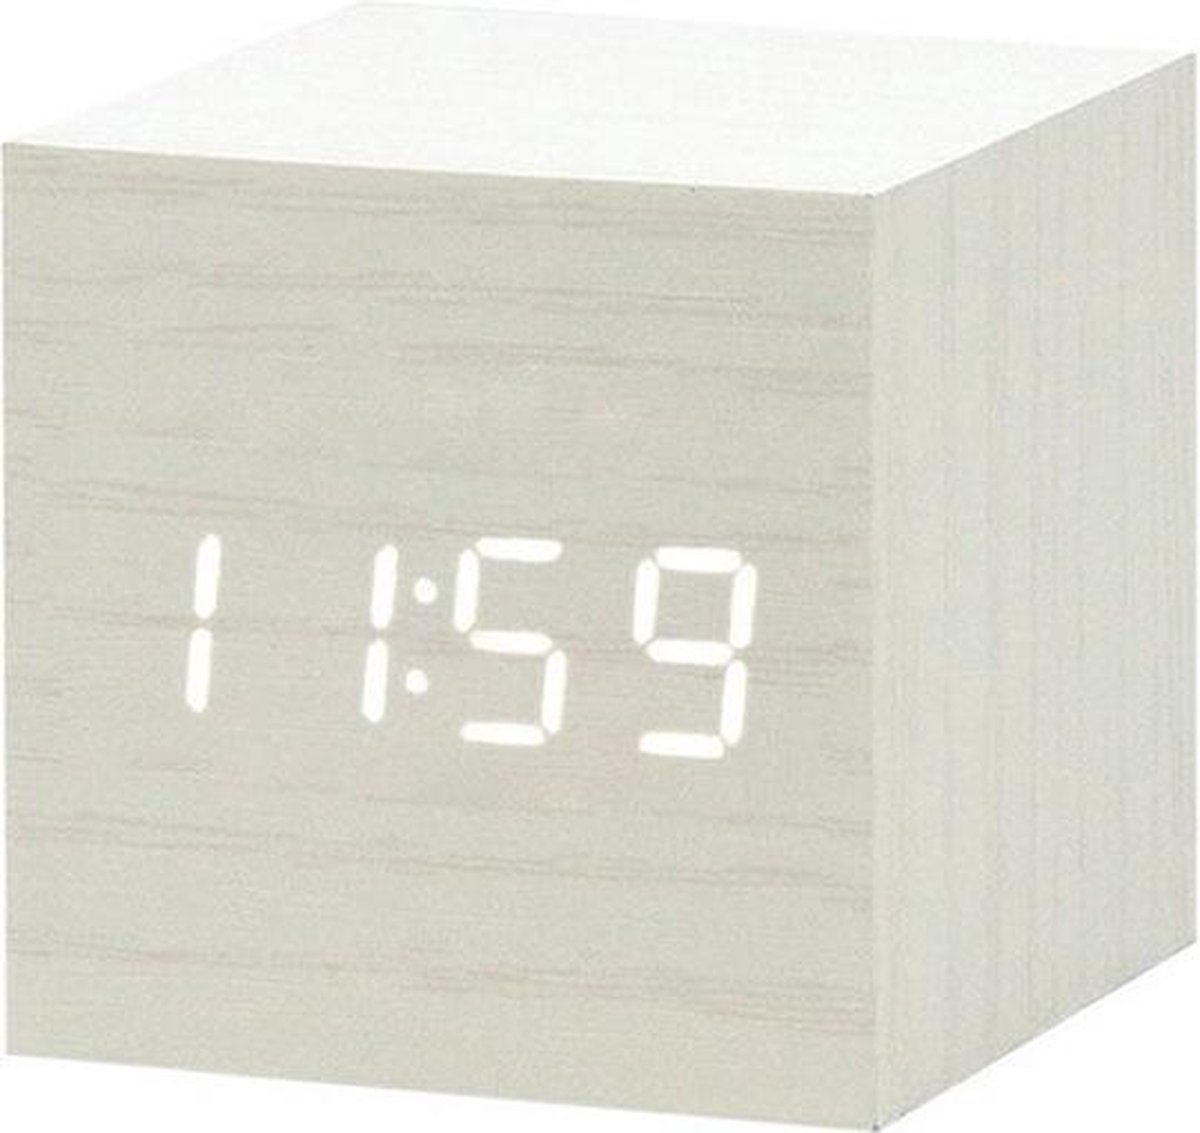 Houten wekker Kubus - Wit - Digitale wekker - Thermometer - Dimbaar – Cube klok clock - Gratis Adapter - Draadloos